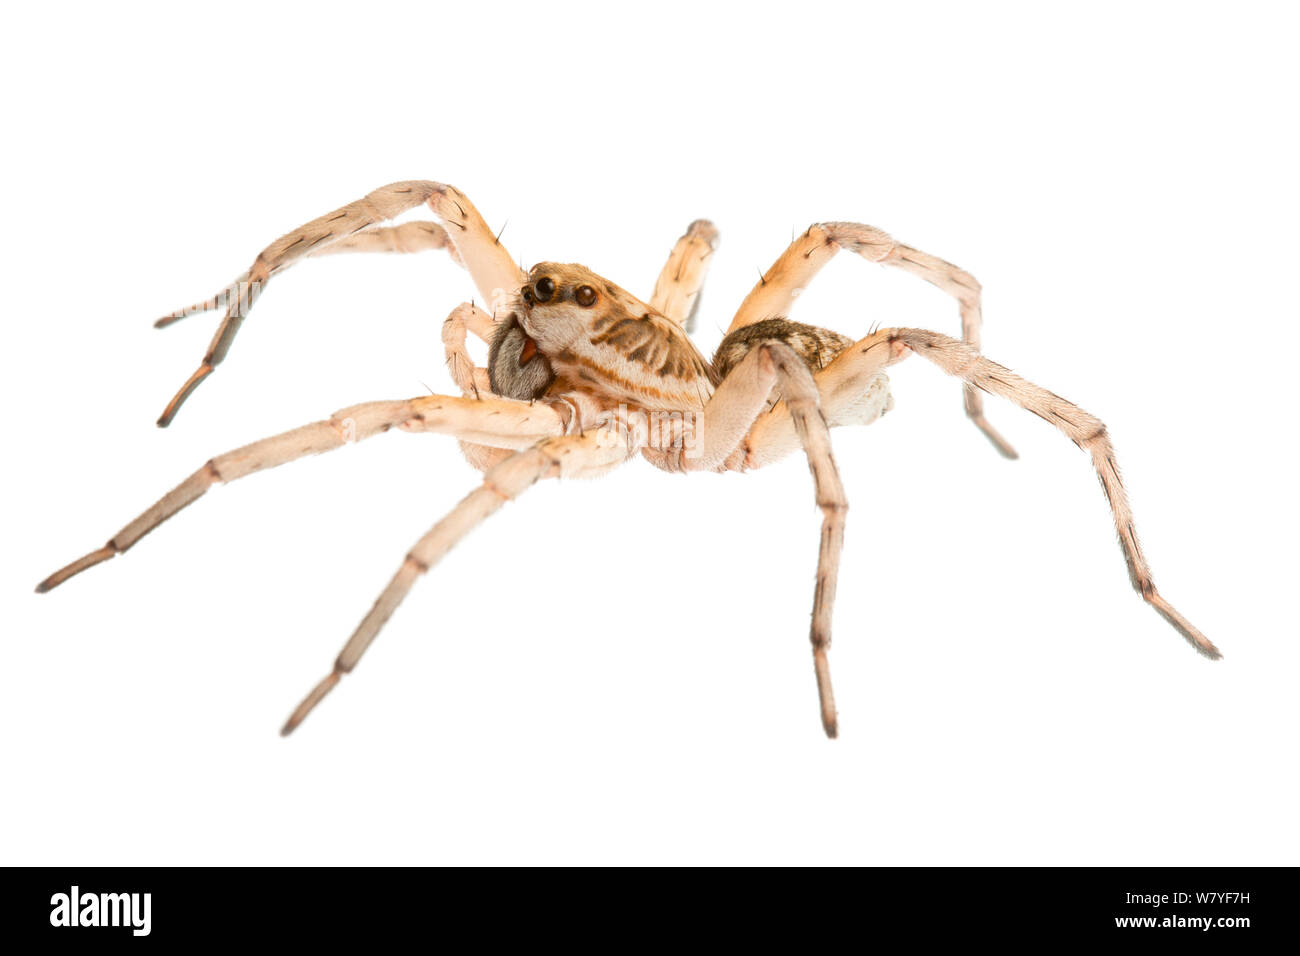 Wolf spider (Lycosa ariadnae), Western Australia. meetyourneighbours.net project Stock Photo